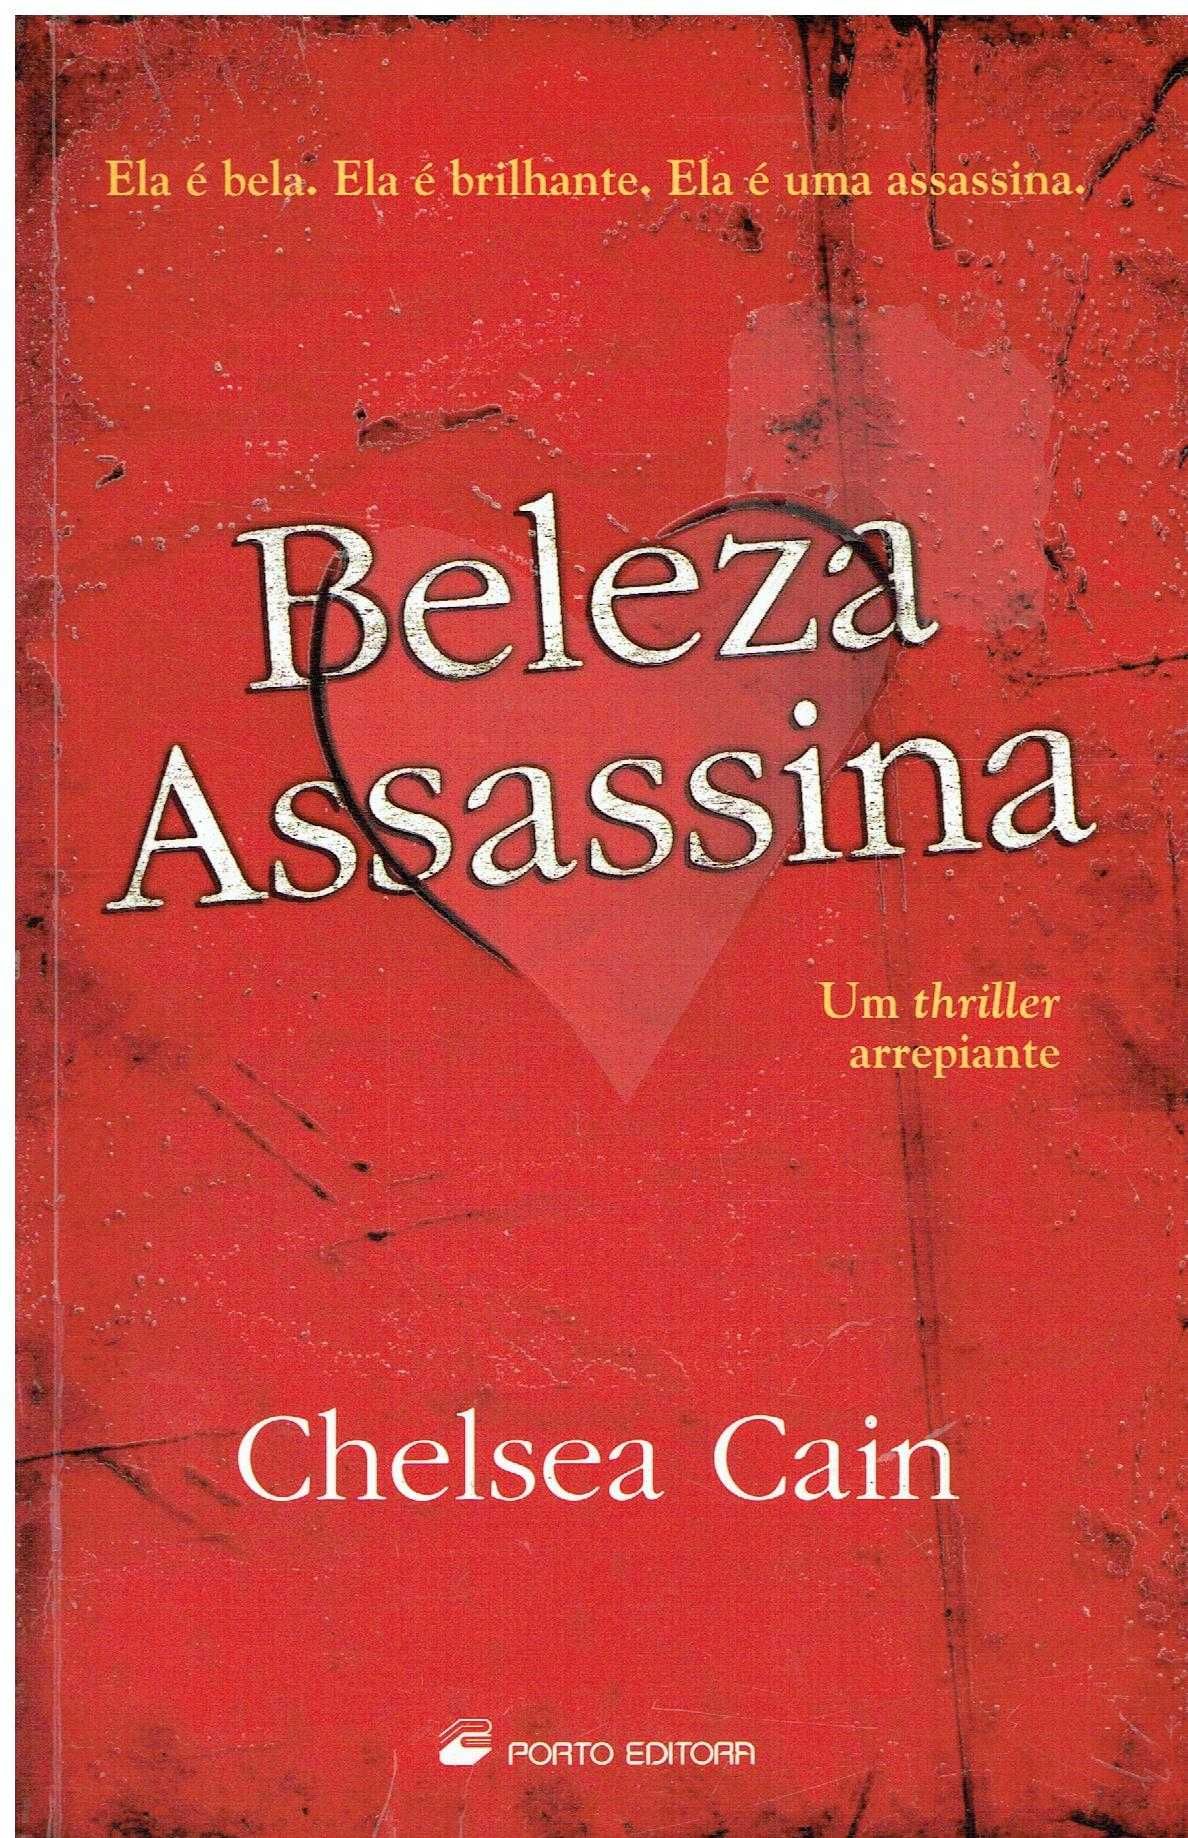 13617

Beleza Assassina
de Chelsea Cain